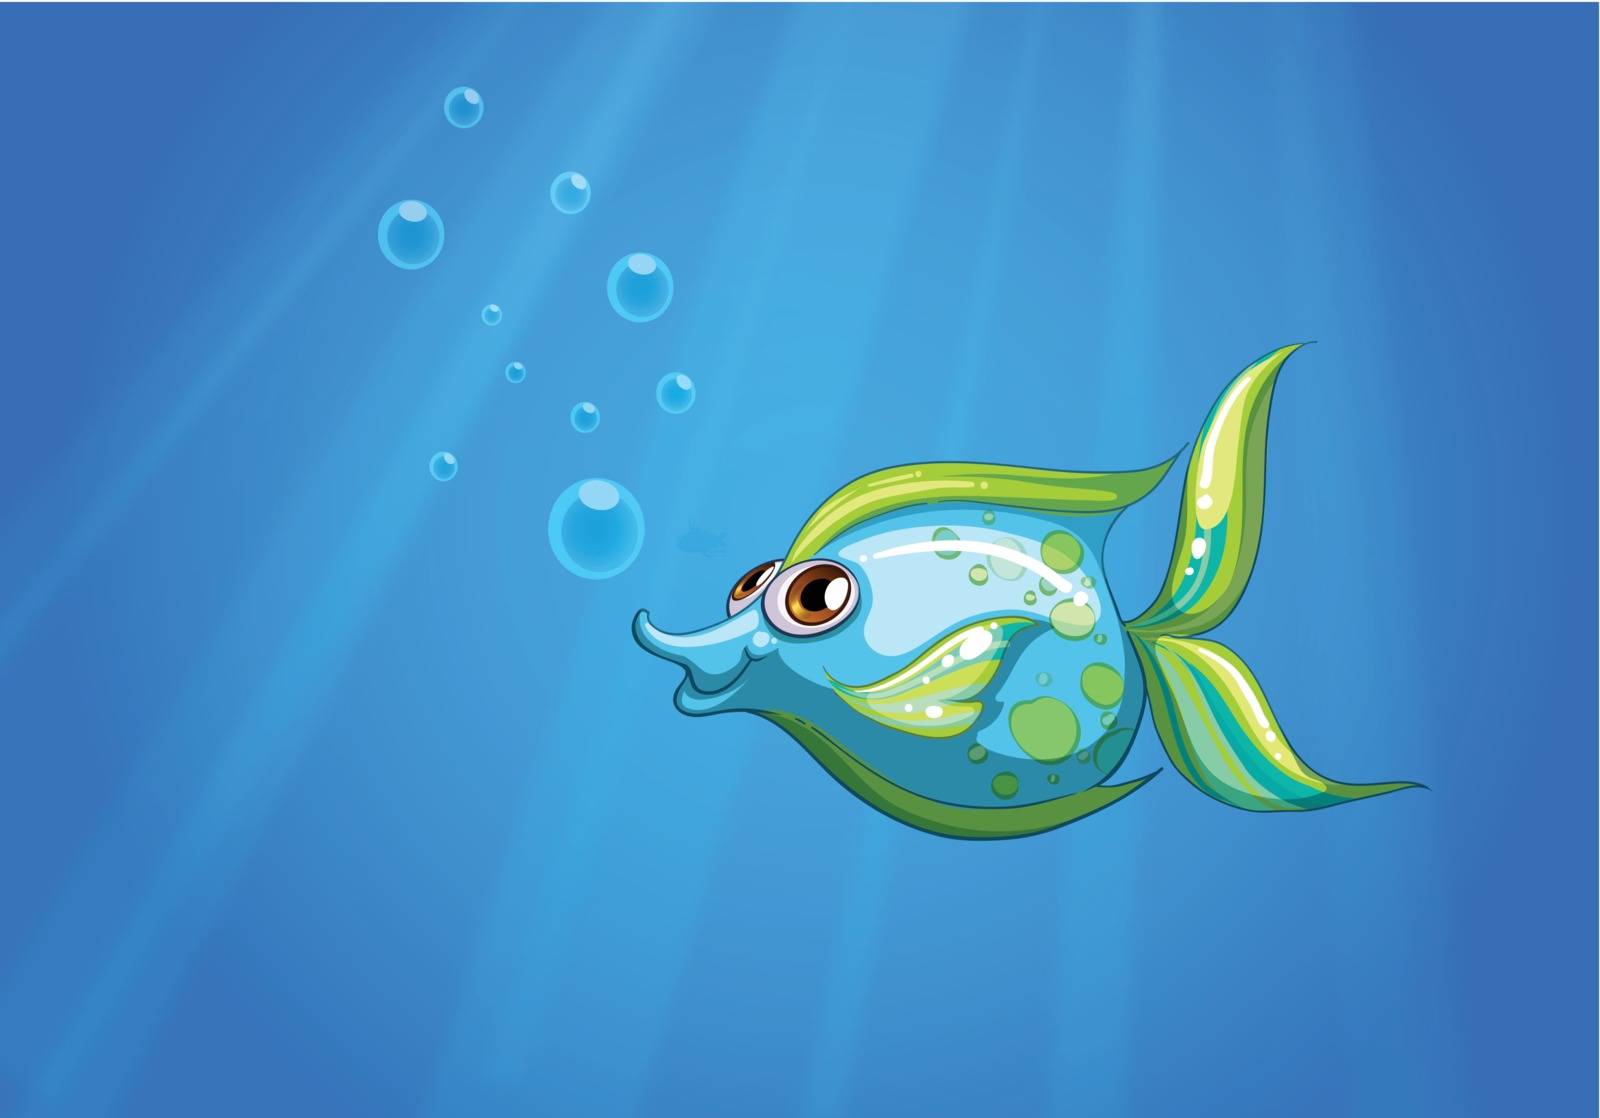 Illustration of an aqua marine fish